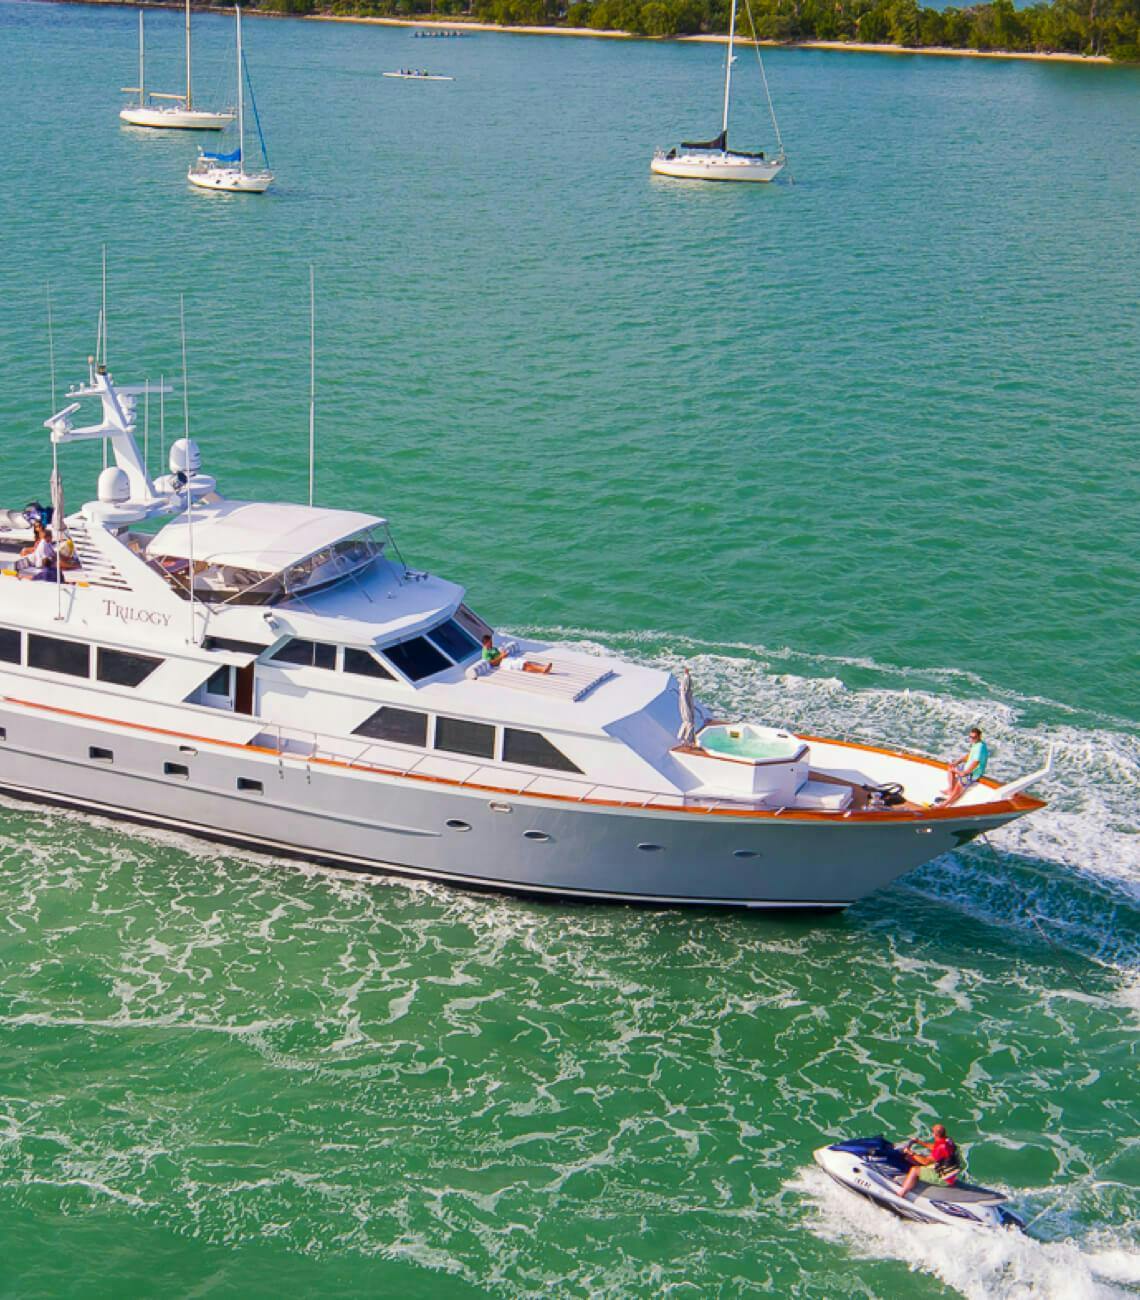 Yachtlife’s Digital Yacht-Charter Platform Expands Reach into the Hamptons